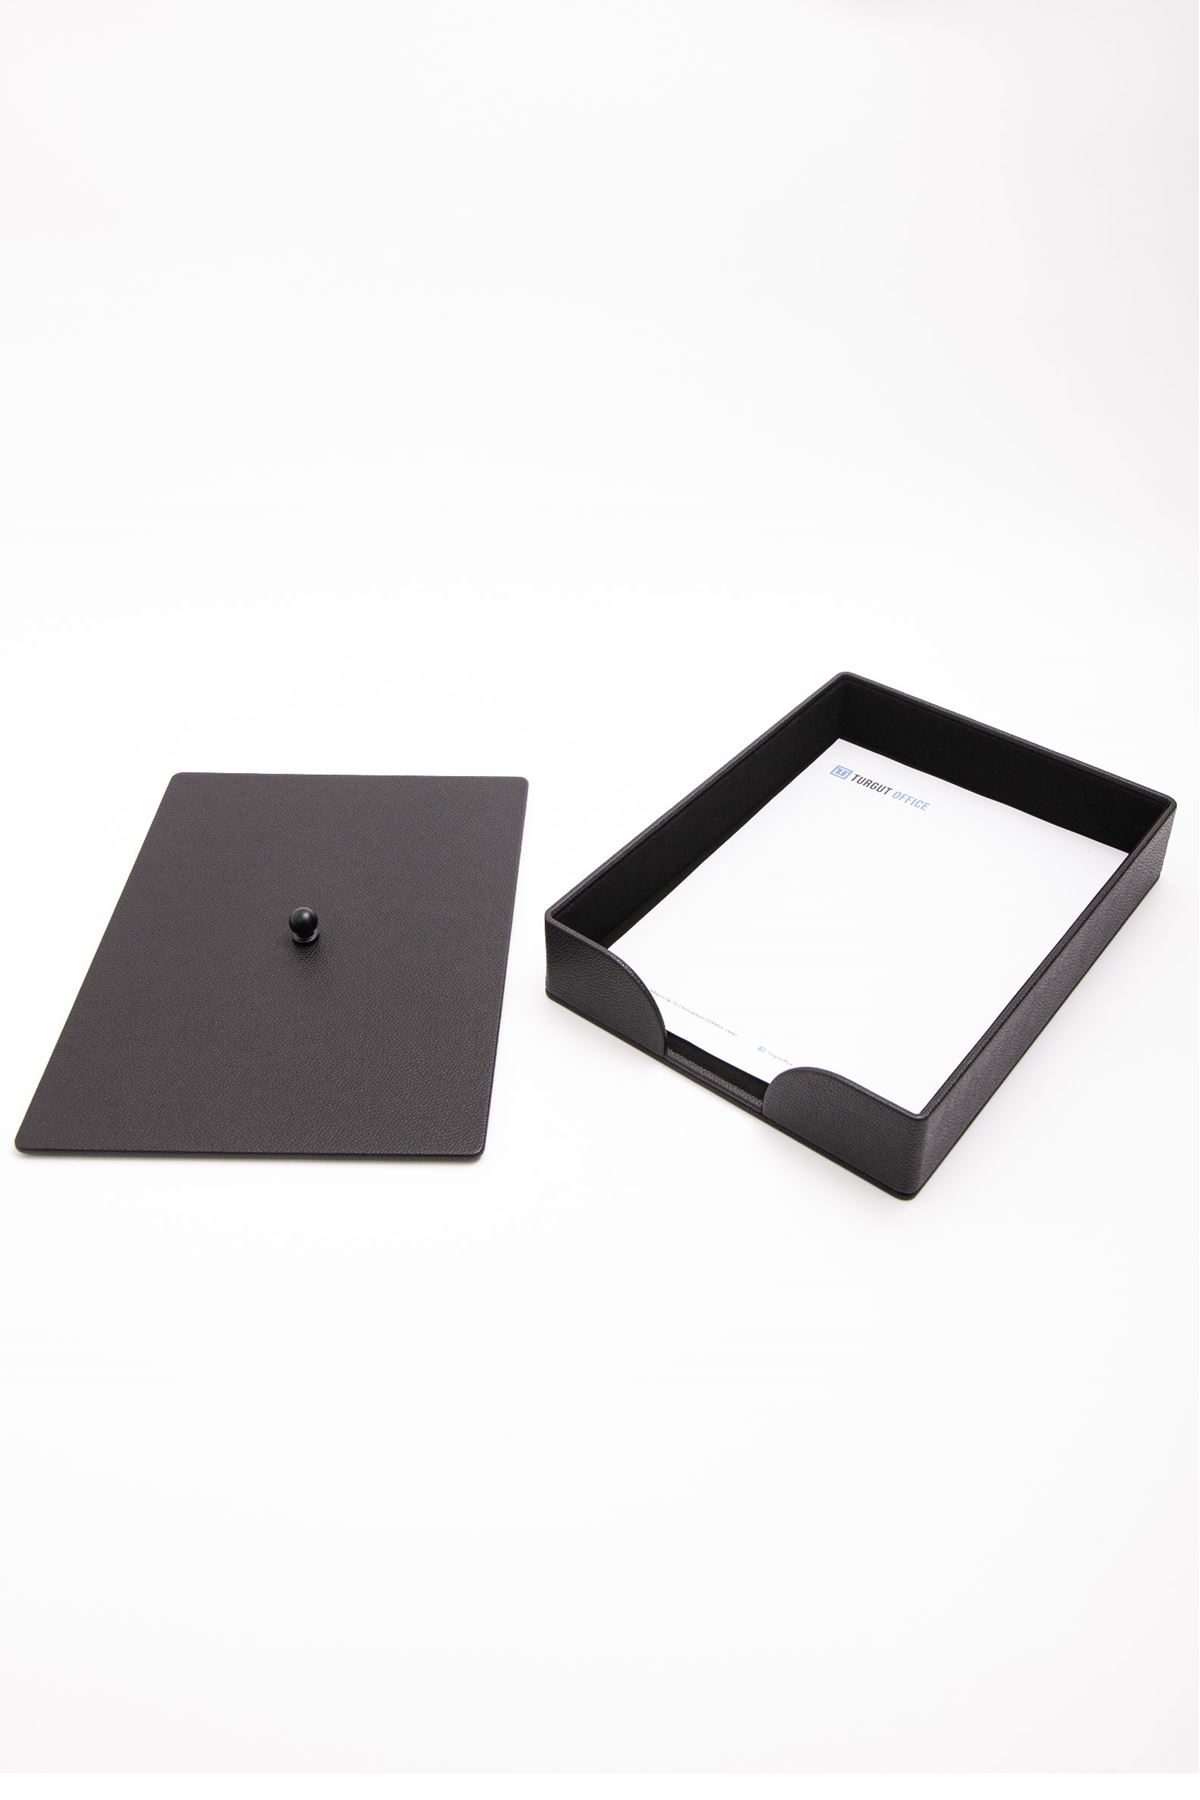 Roma Black Leather Document Shelf covered Model